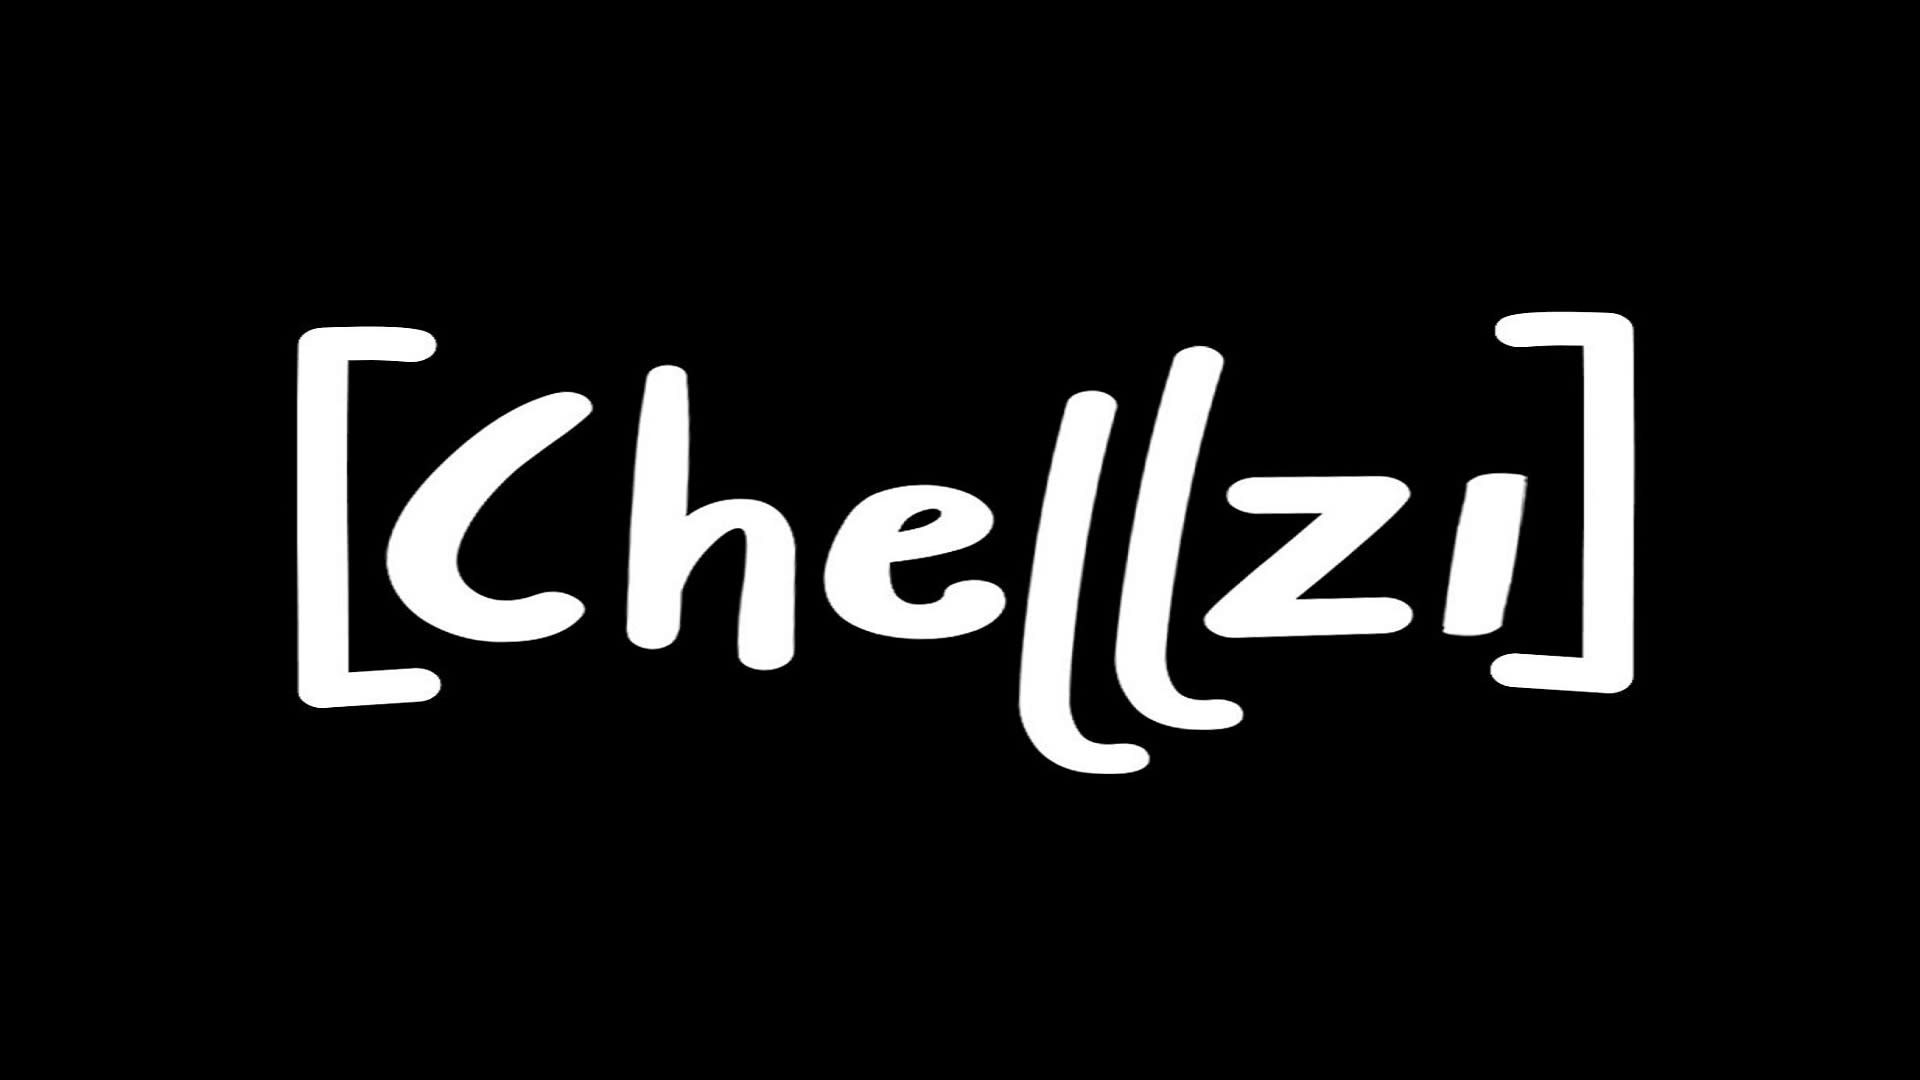 Chellzi